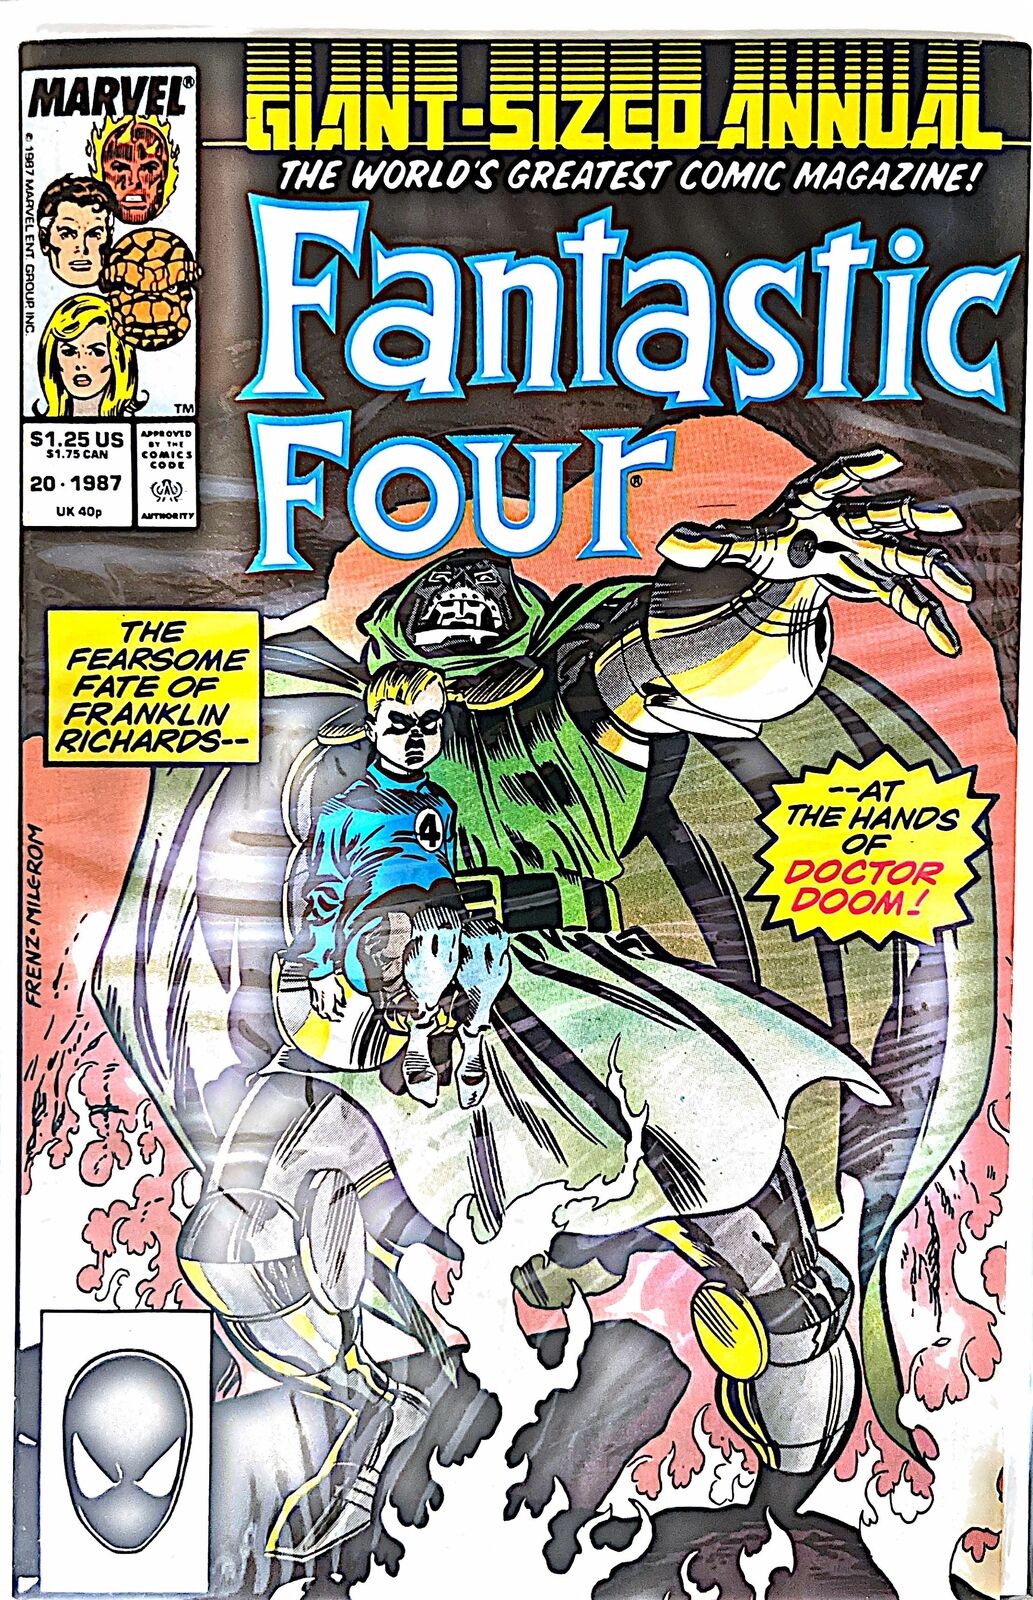 Fantastic Four Annual, #20 (Marvel, 1987)